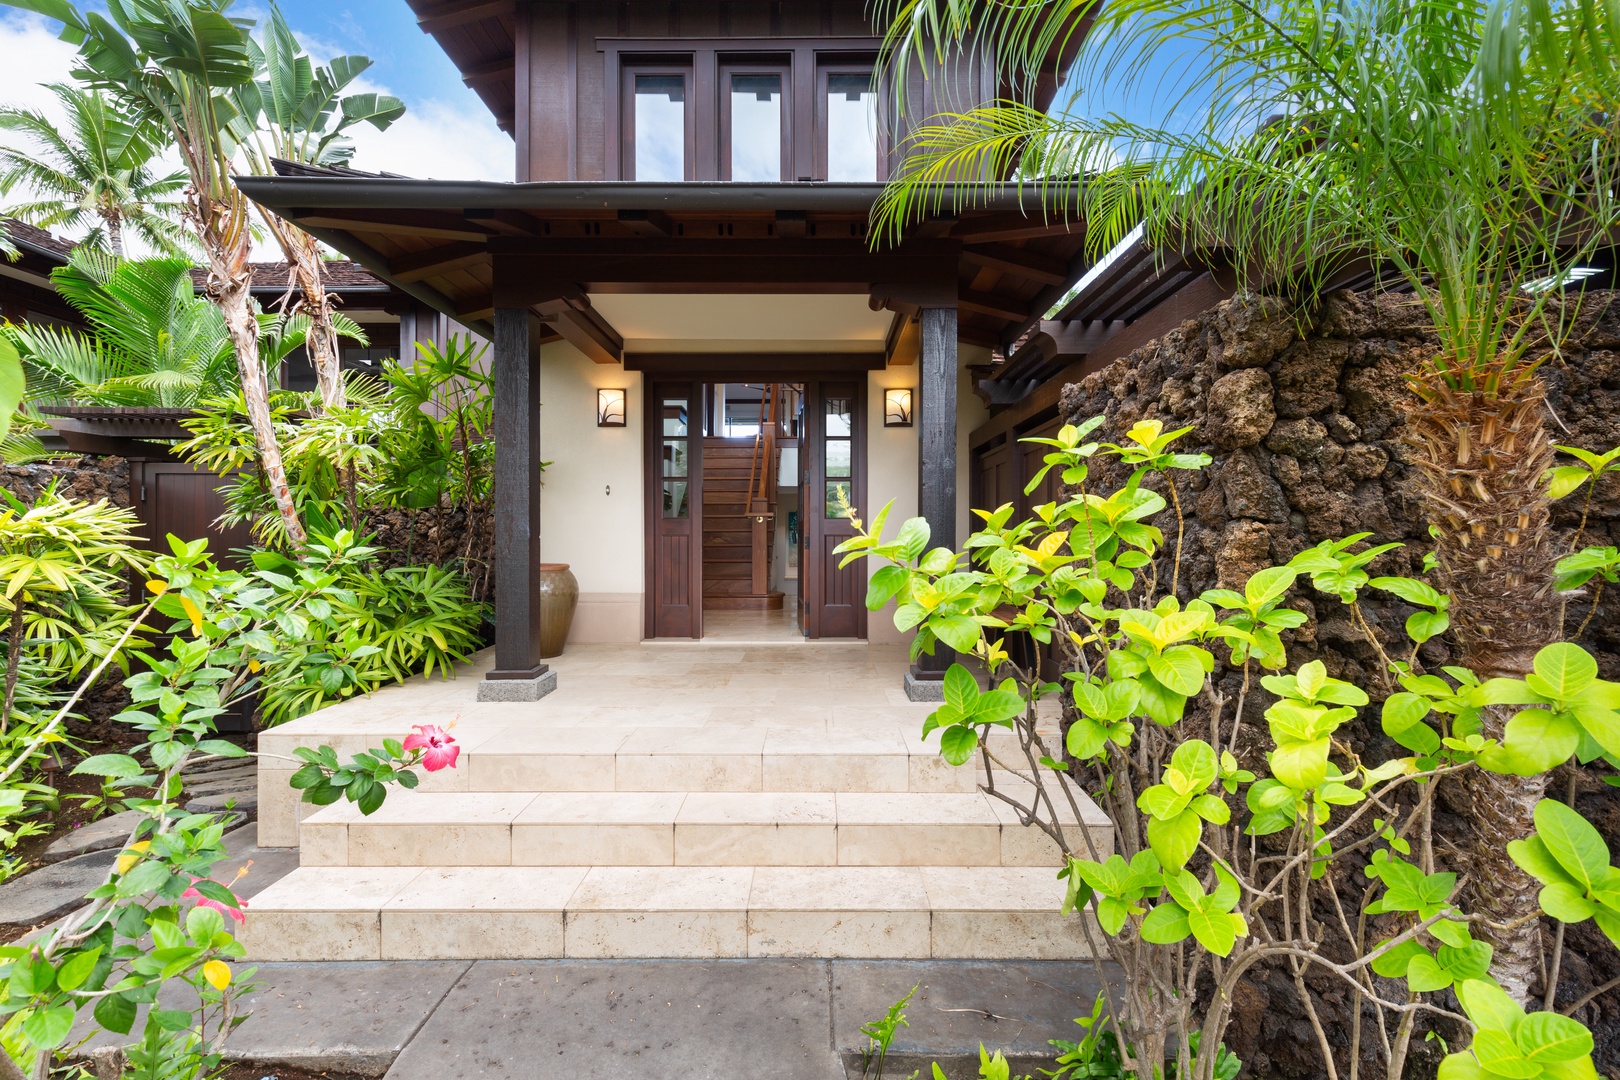 Kailua-Kona Vacation Rentals, 3BD Hali'ipua Villa (120) at Four Seasons Resort at Hualalai - Stunning tropical landscaping welcomes you to your private villa entrance